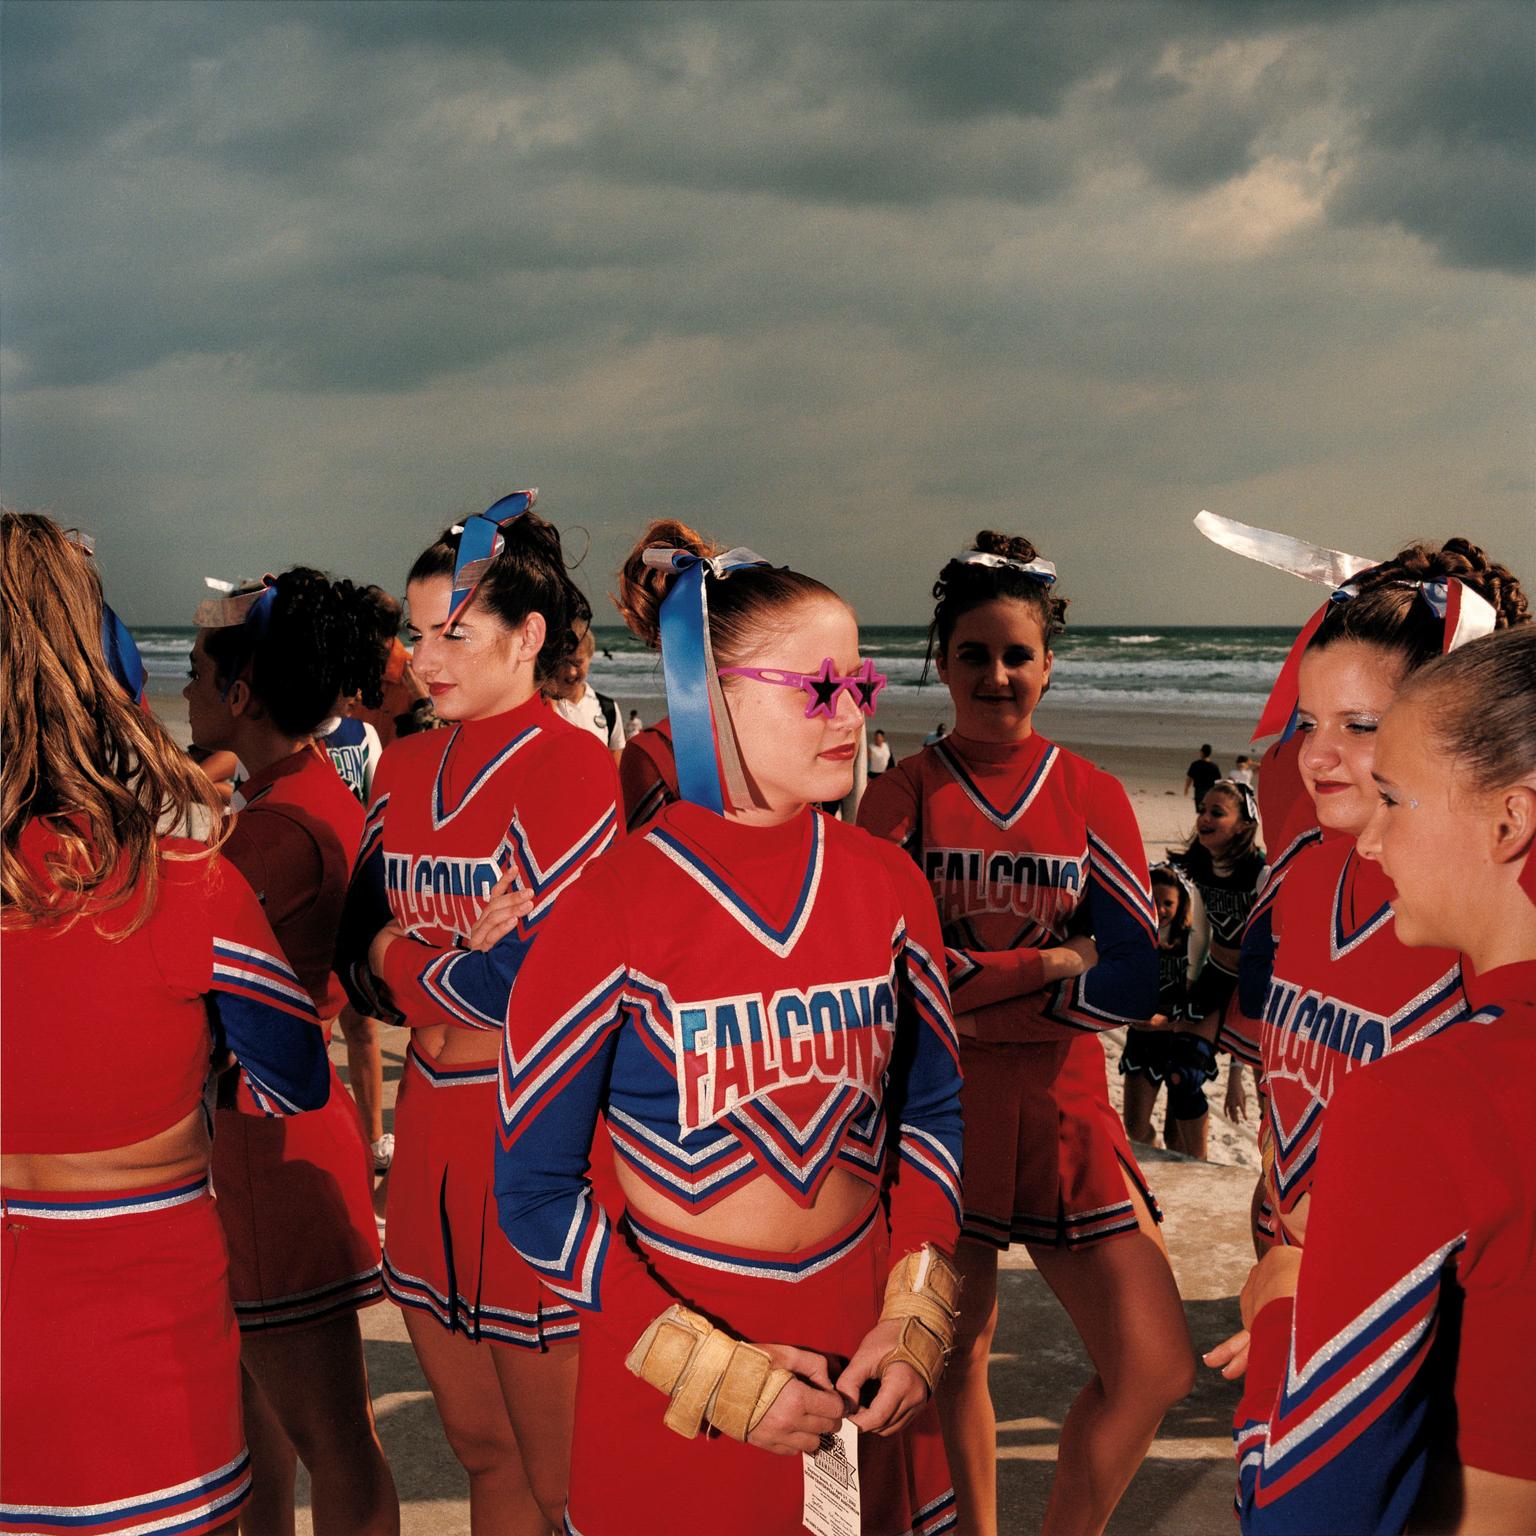 Brian Finke Color Photograph - Untitled (Cheerleading no. 119)